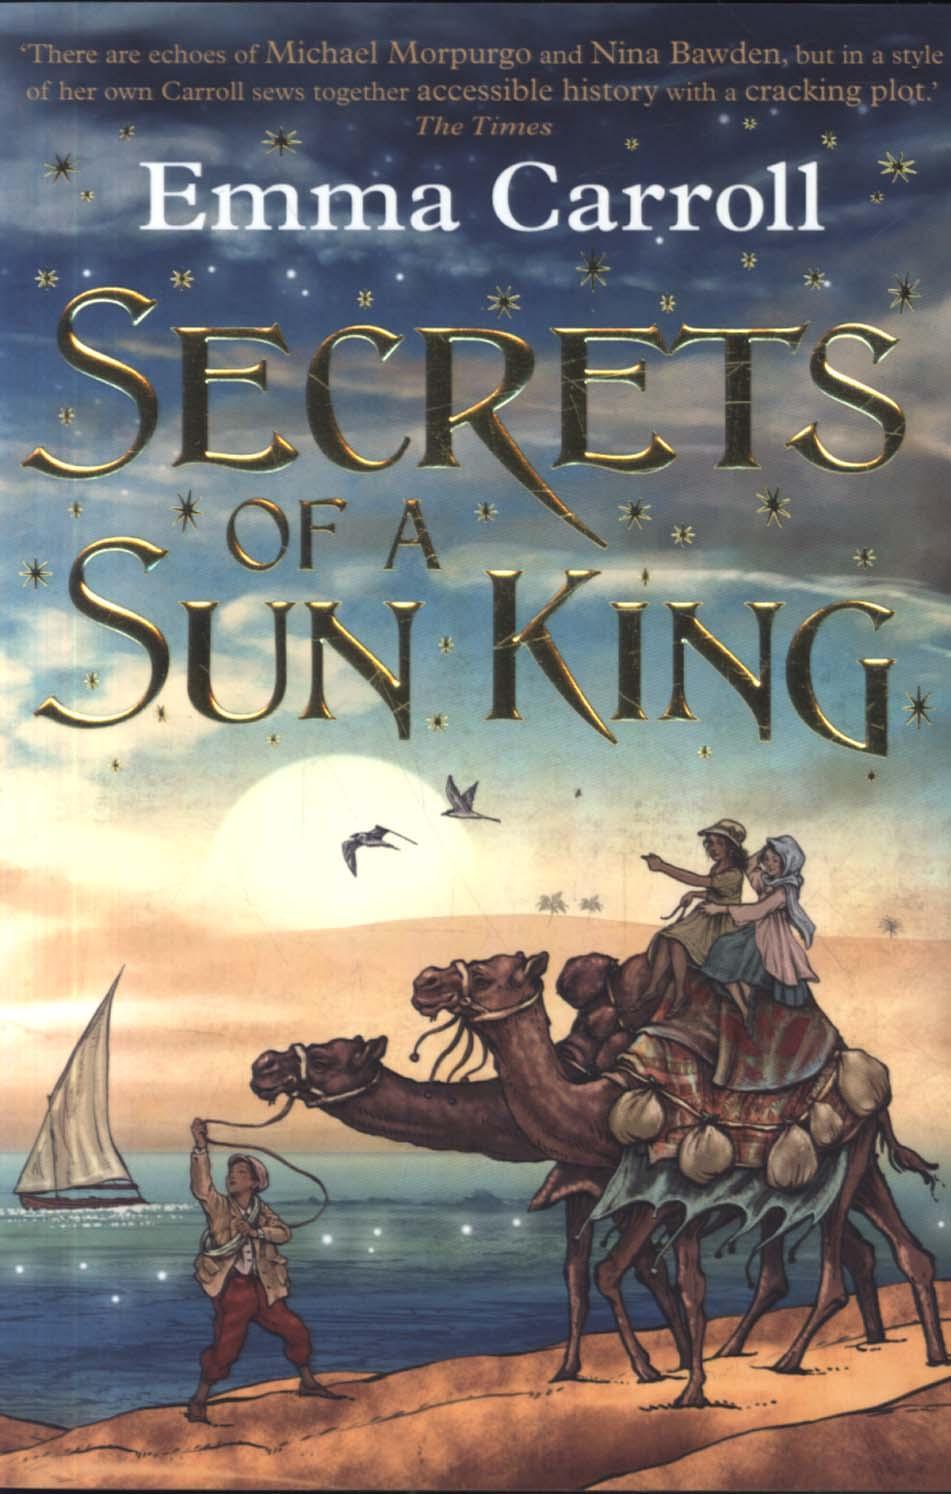 Secrets of a Sun King